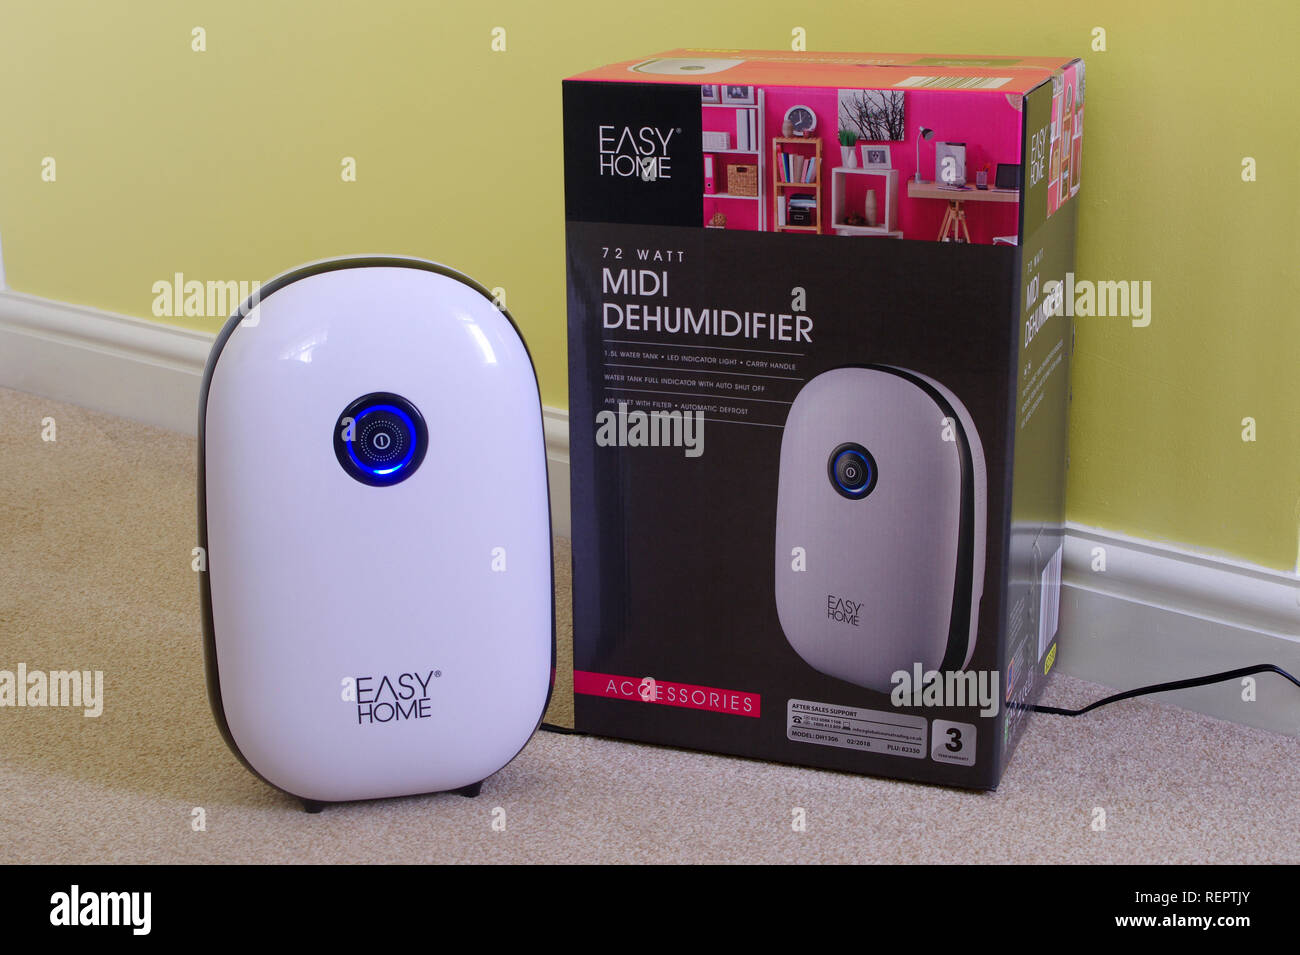 Easy Home Midi Dehumidifier Appliance in a Home Setting, UK Stock Photo -  Alamy